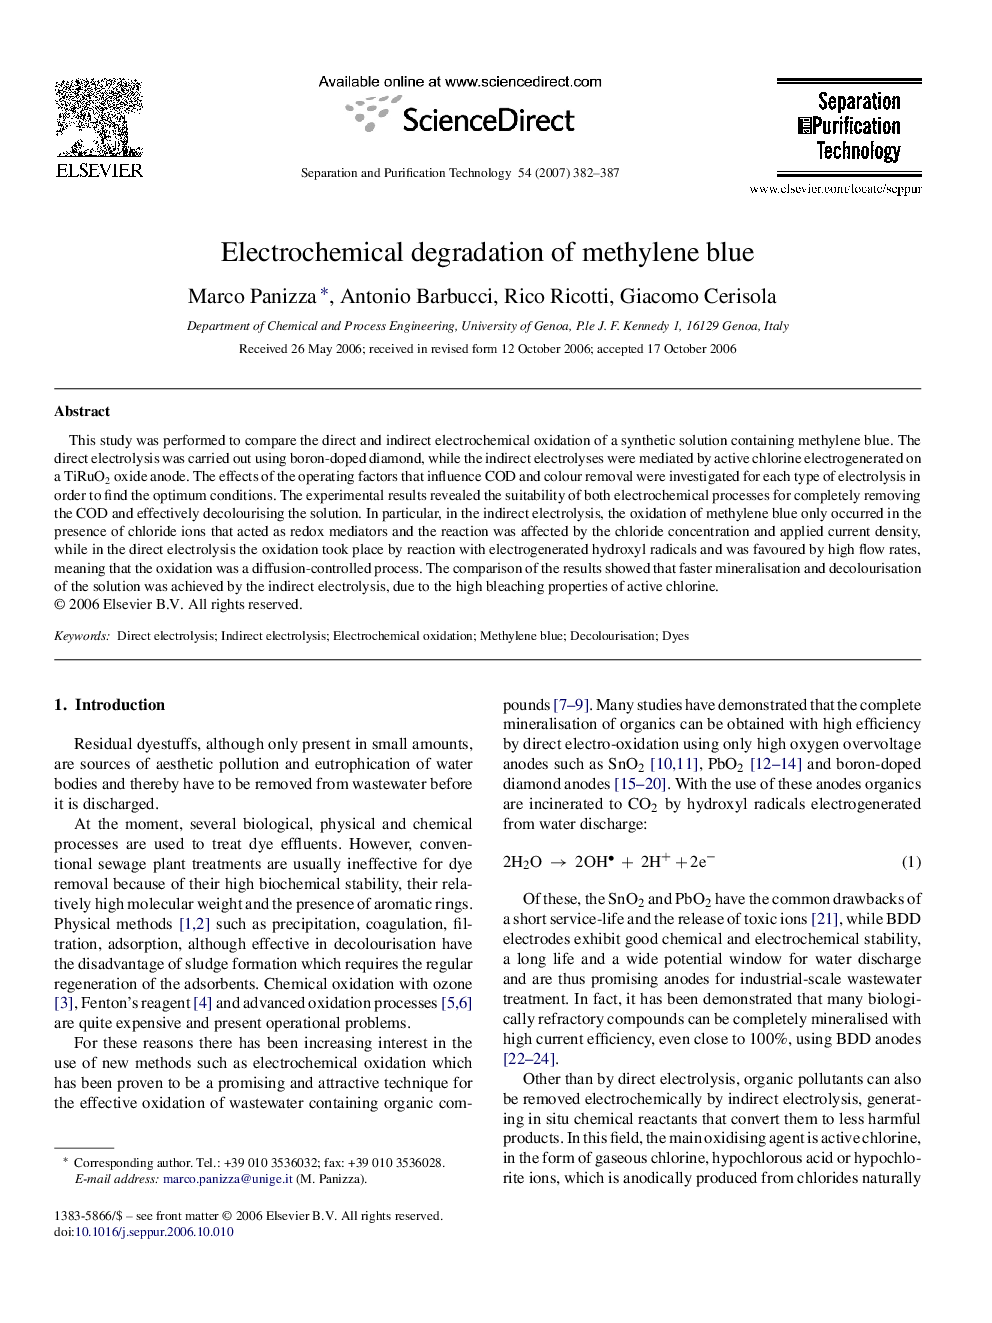 Electrochemical degradation of methylene blue